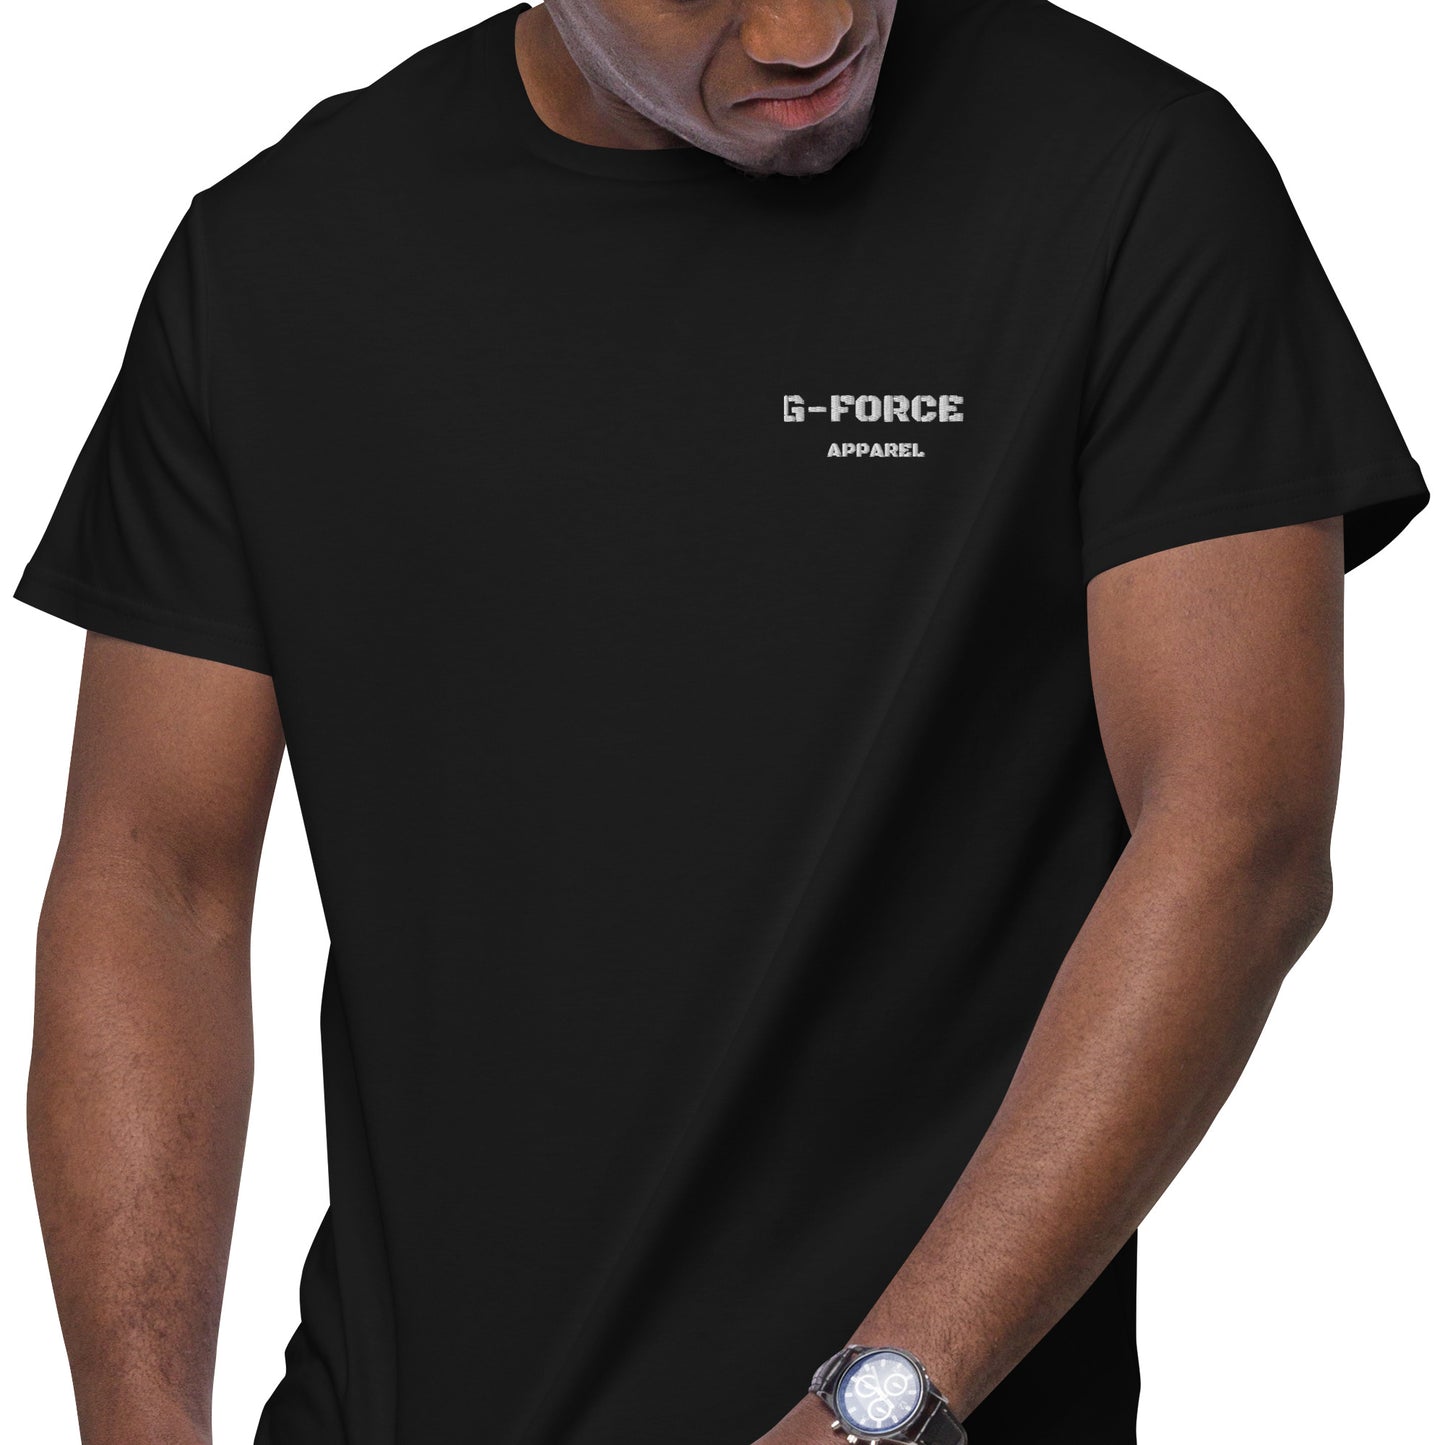 G-FORCE APPAREL Block t-shirt